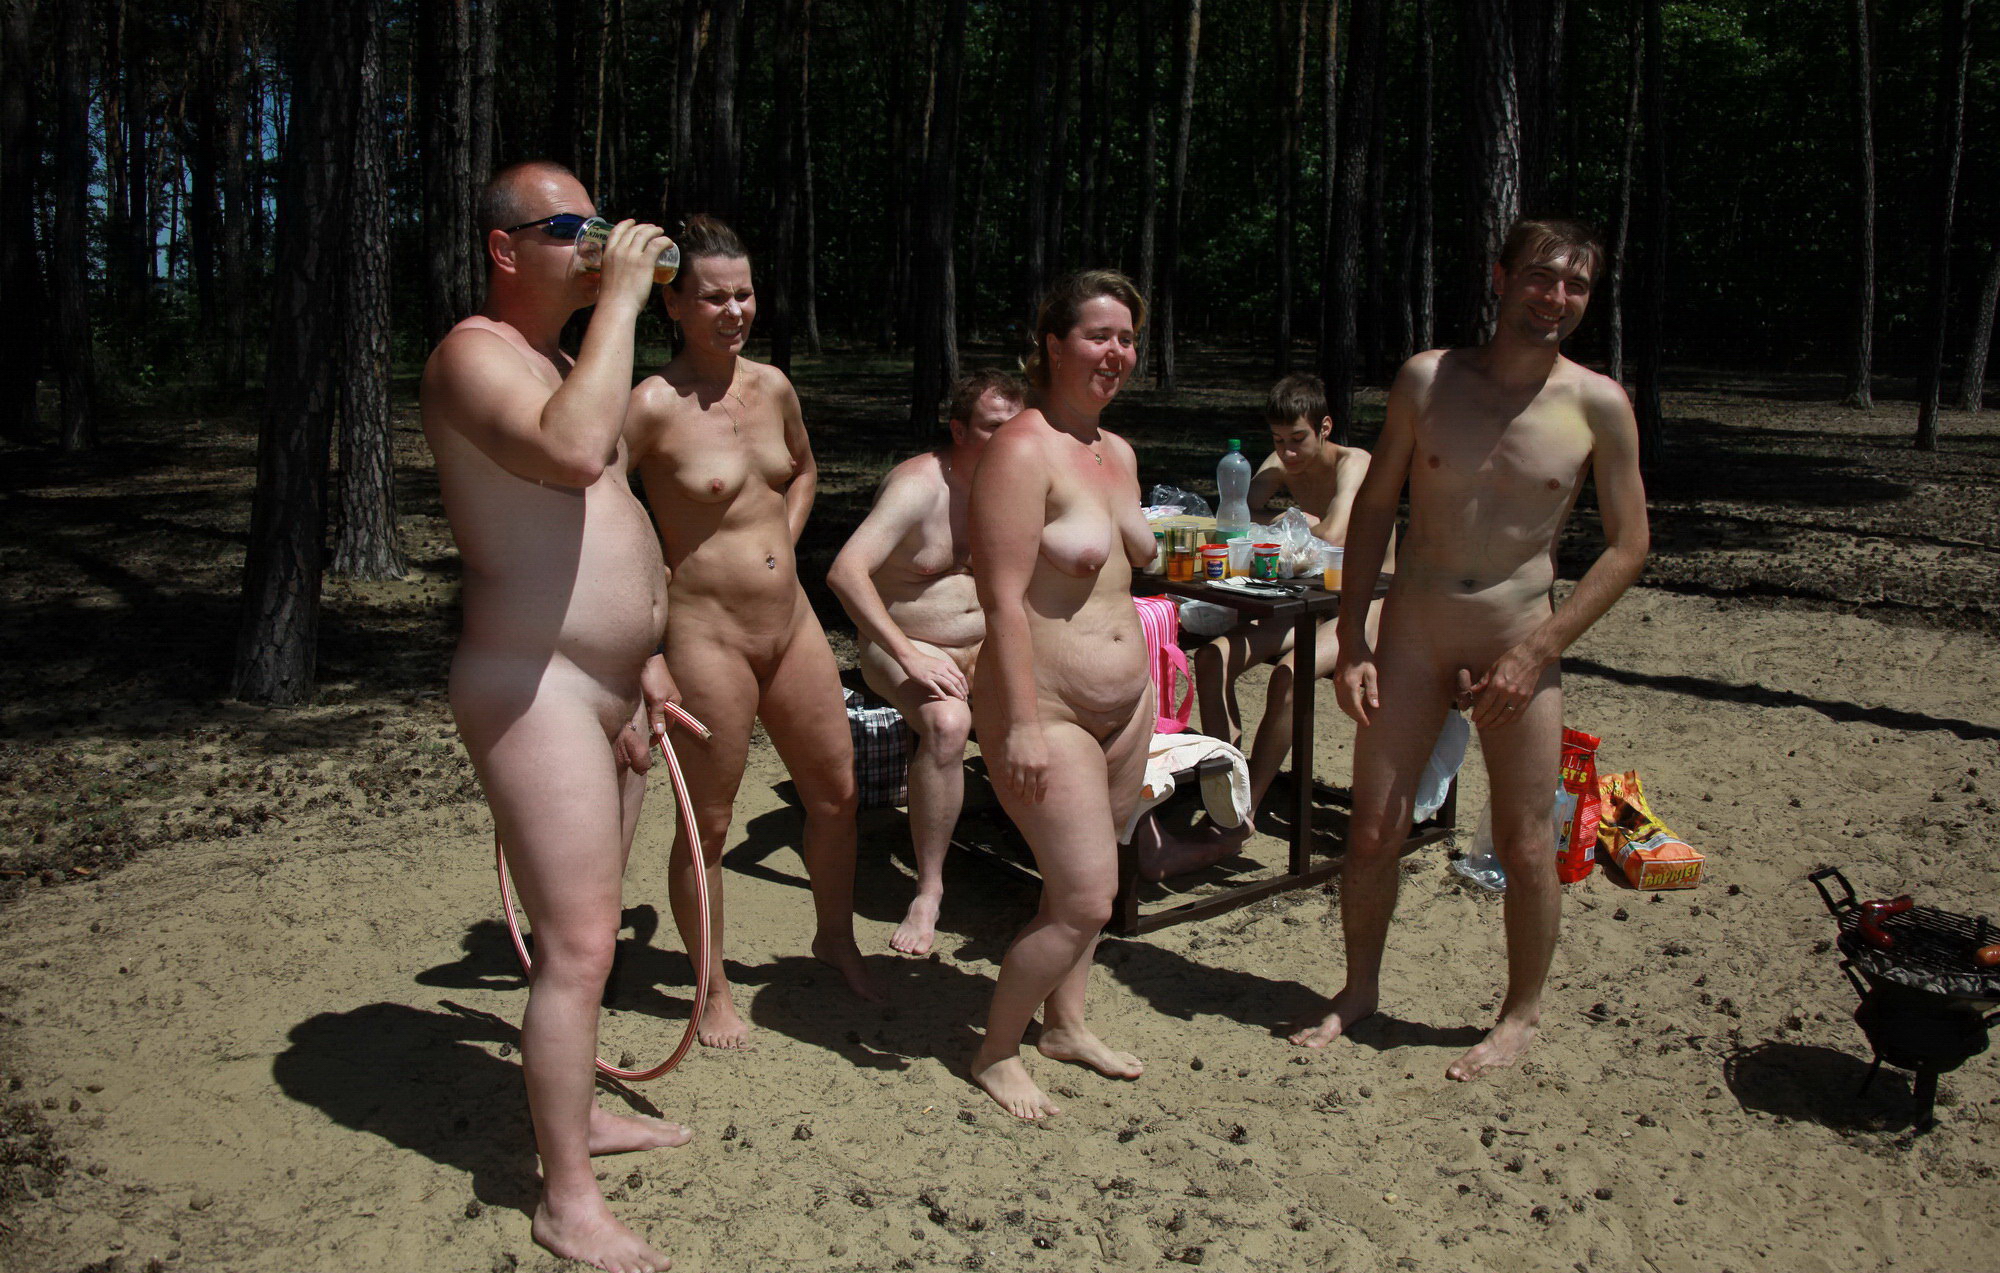 https://voyeurpapa.com/wp-content/uploads/2016/12/Nudists-family-nude-beach-22.jpg